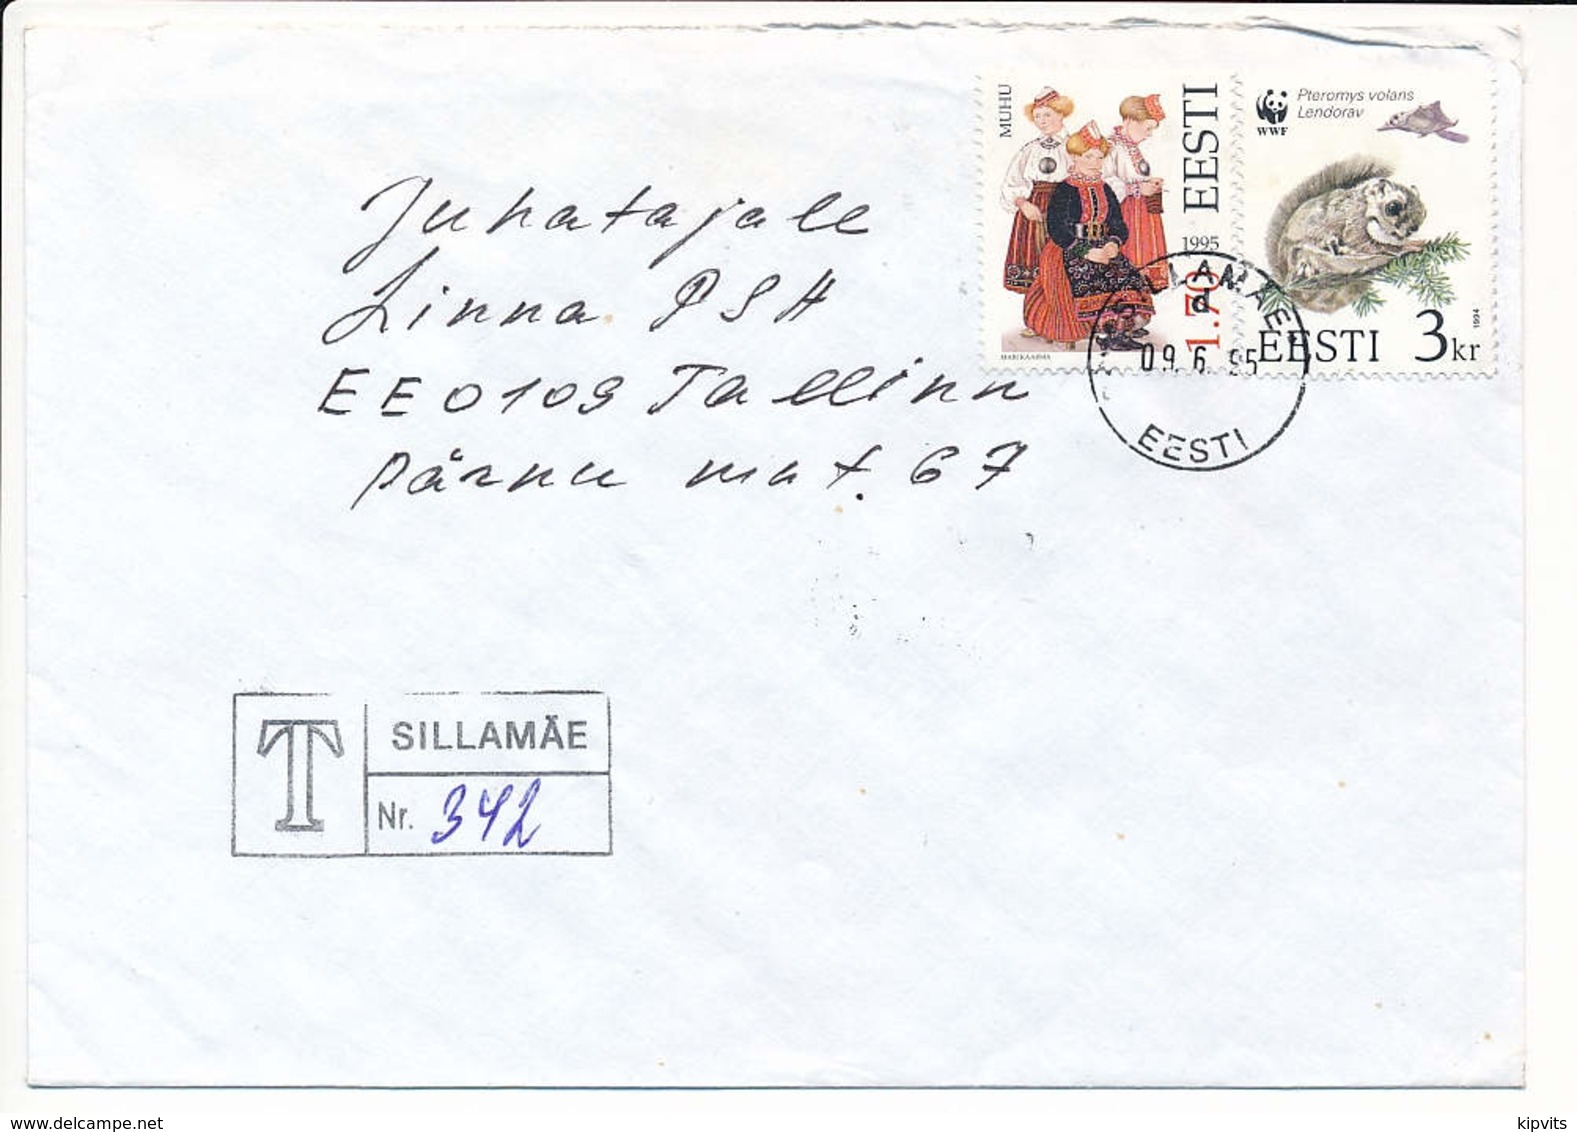 Registered Commercial Cover Multiple Stamps - 9 June 1995 Sillamäe - Estland